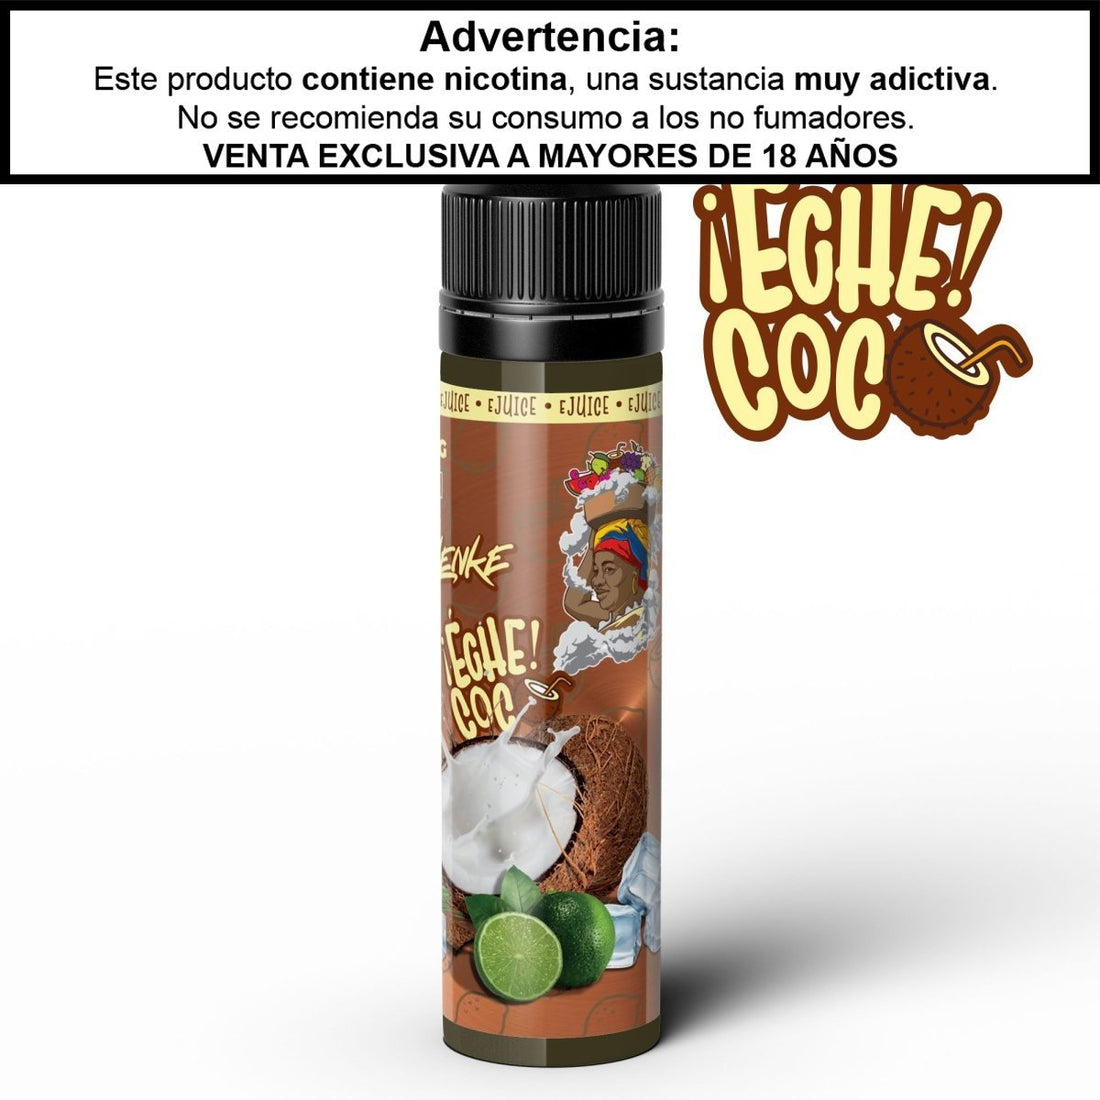 ¡Eche Coco! - Eliquid - Palenke Ejuice | BL-PLK-ECH-00